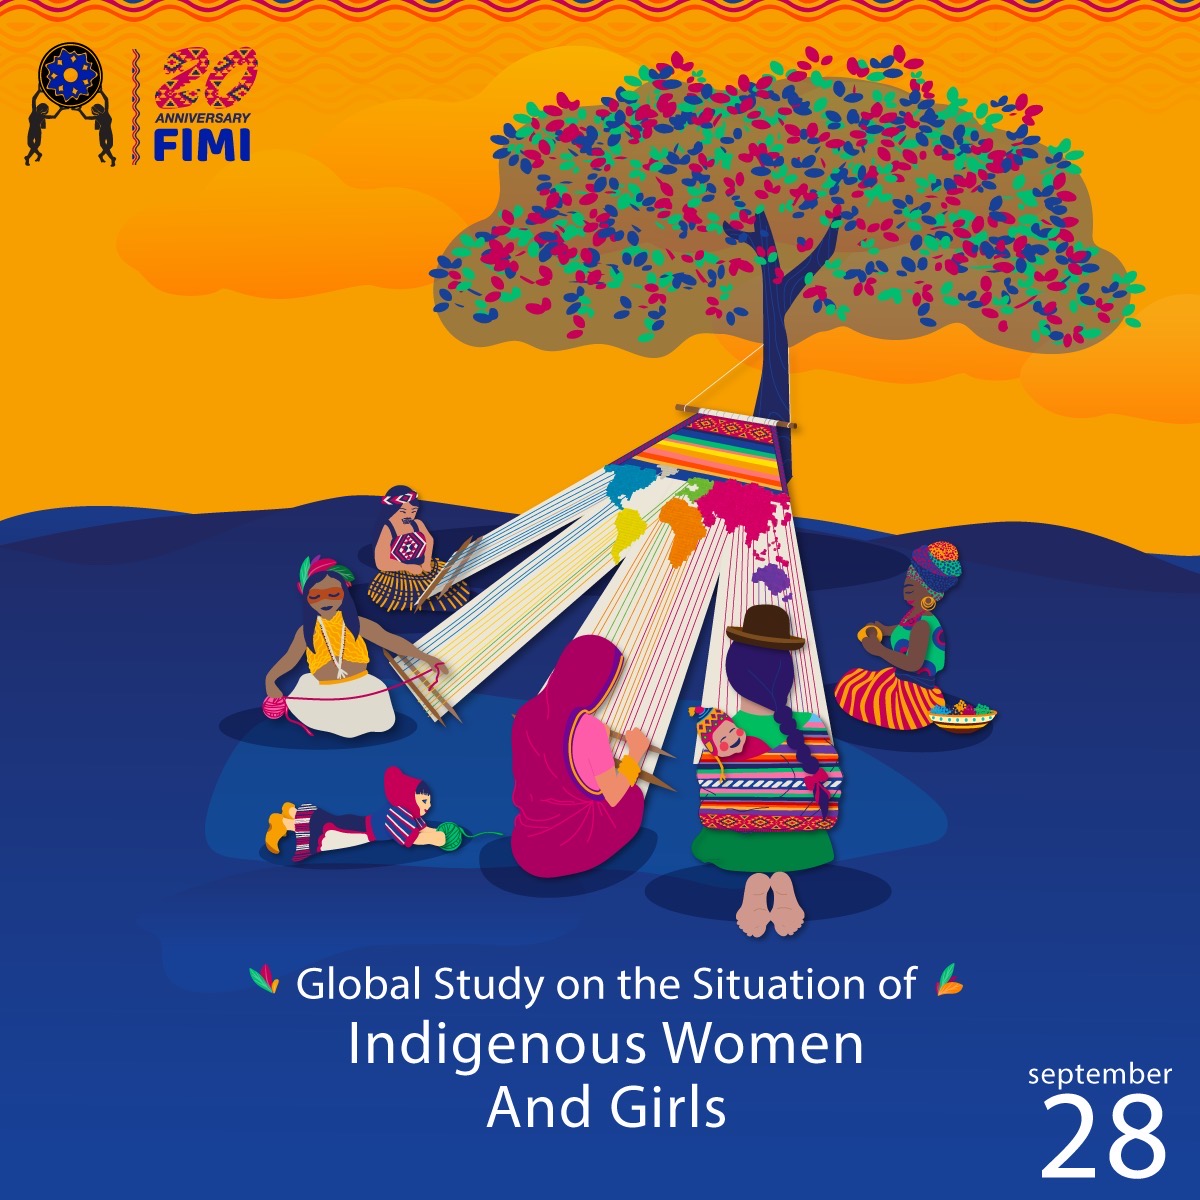 The International Indigenous Women's Forum launches seminal Global